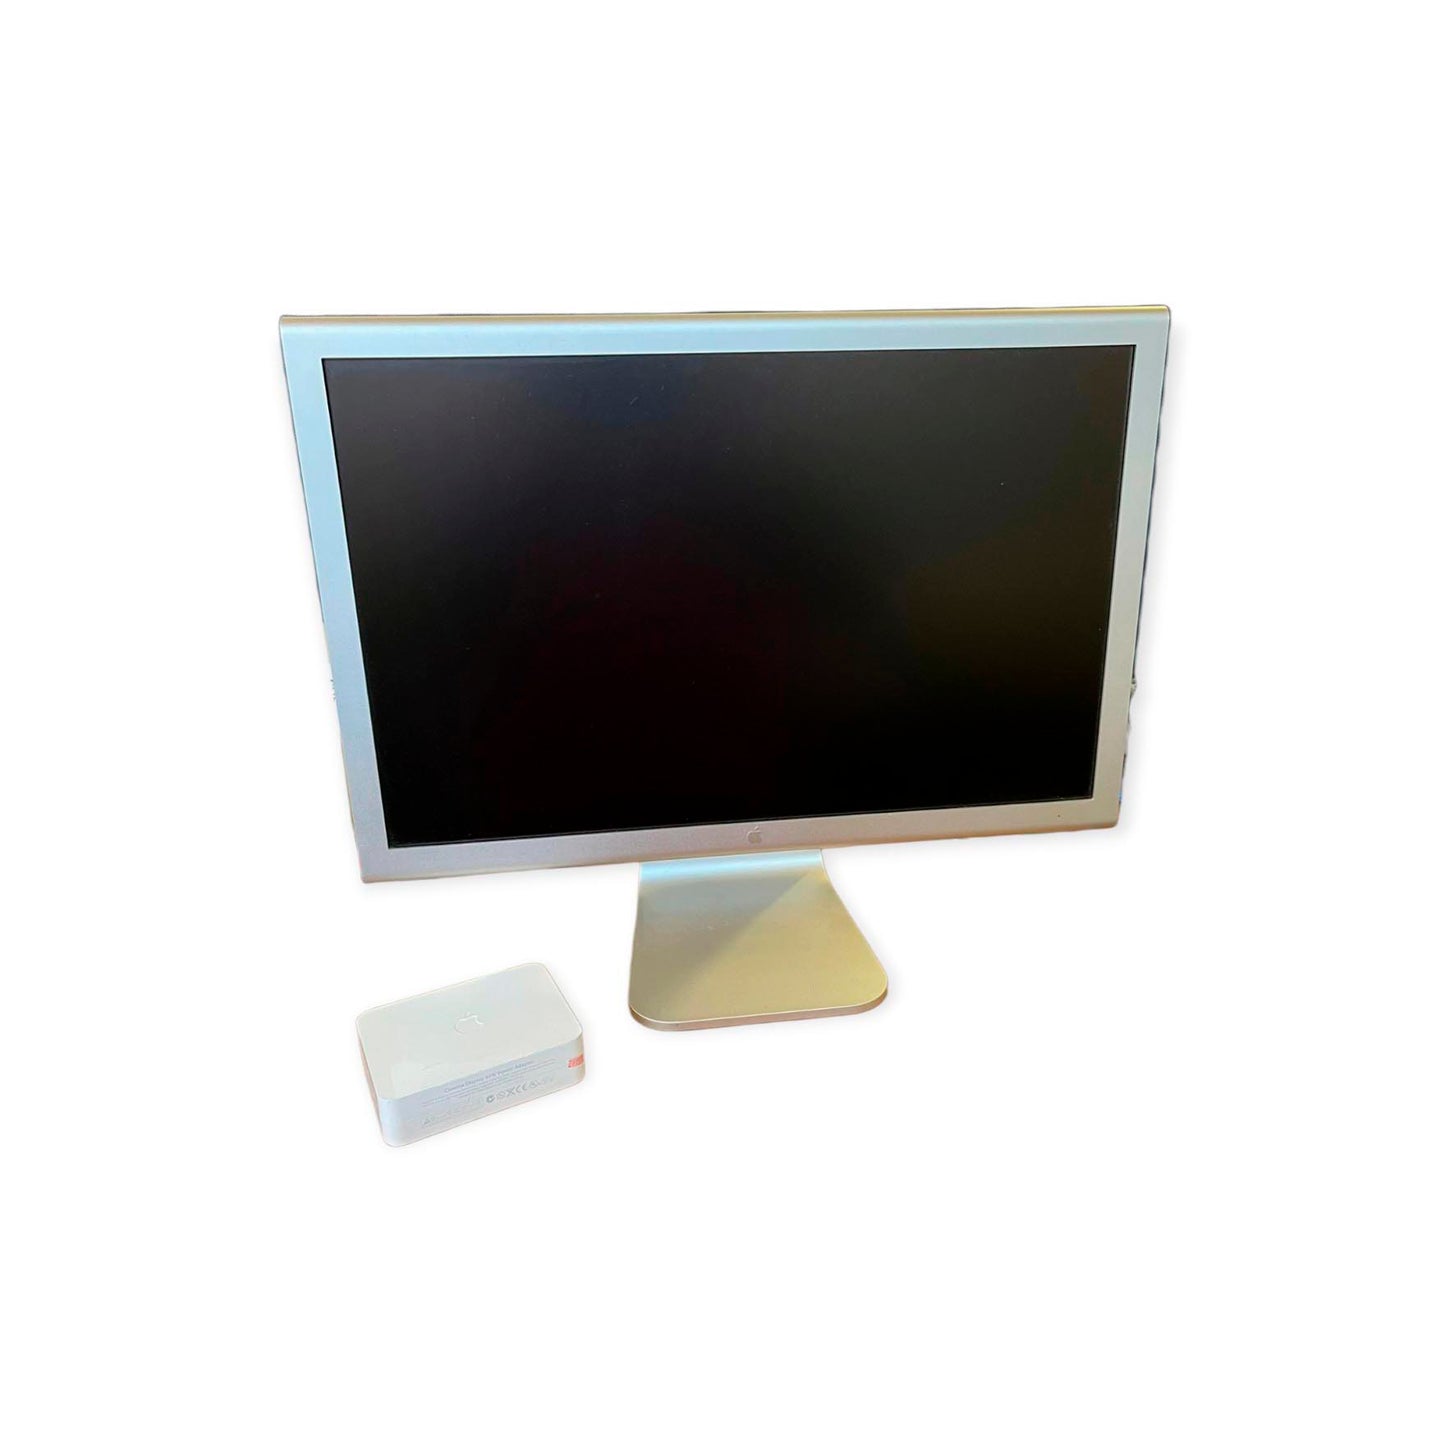 Monitor Apple Cinema Display 20'' 1680x1050 A0181 Completo